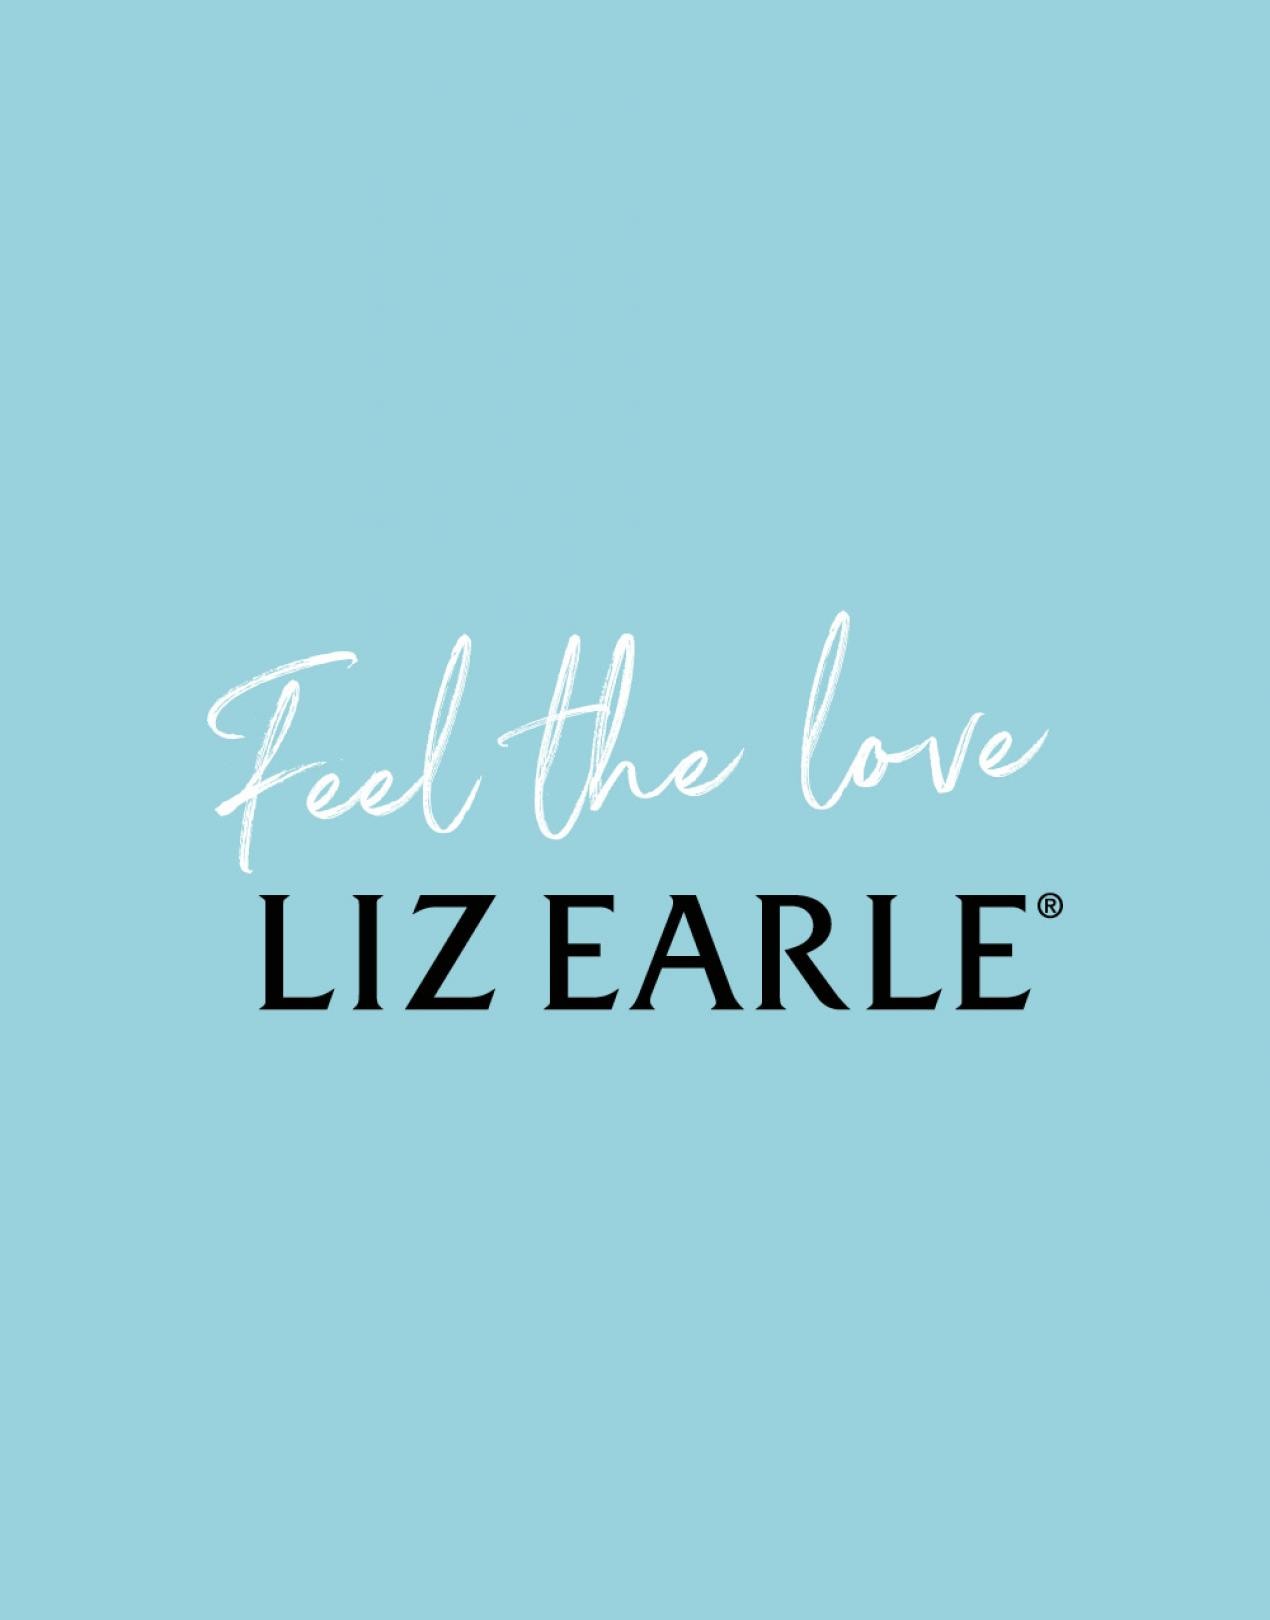 Liz Earle Logo on Blue Background